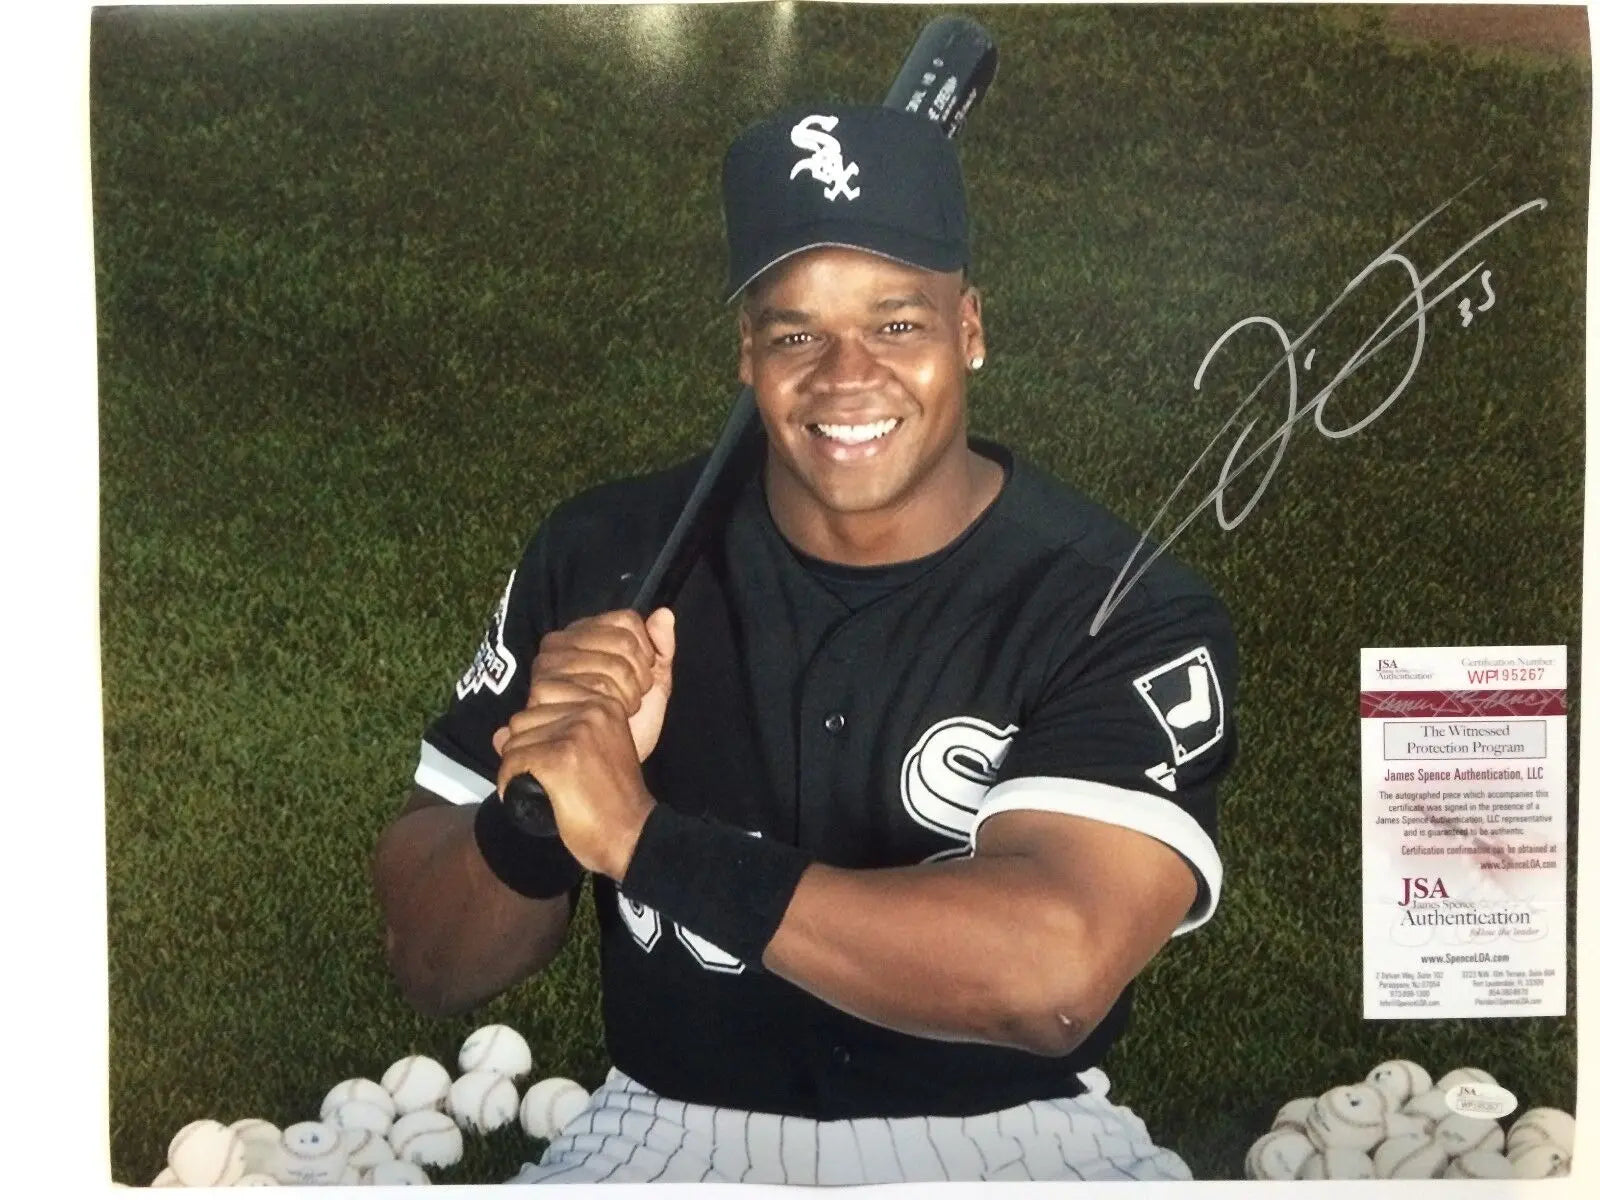 Frank Thomas Autograph Baseball In Display